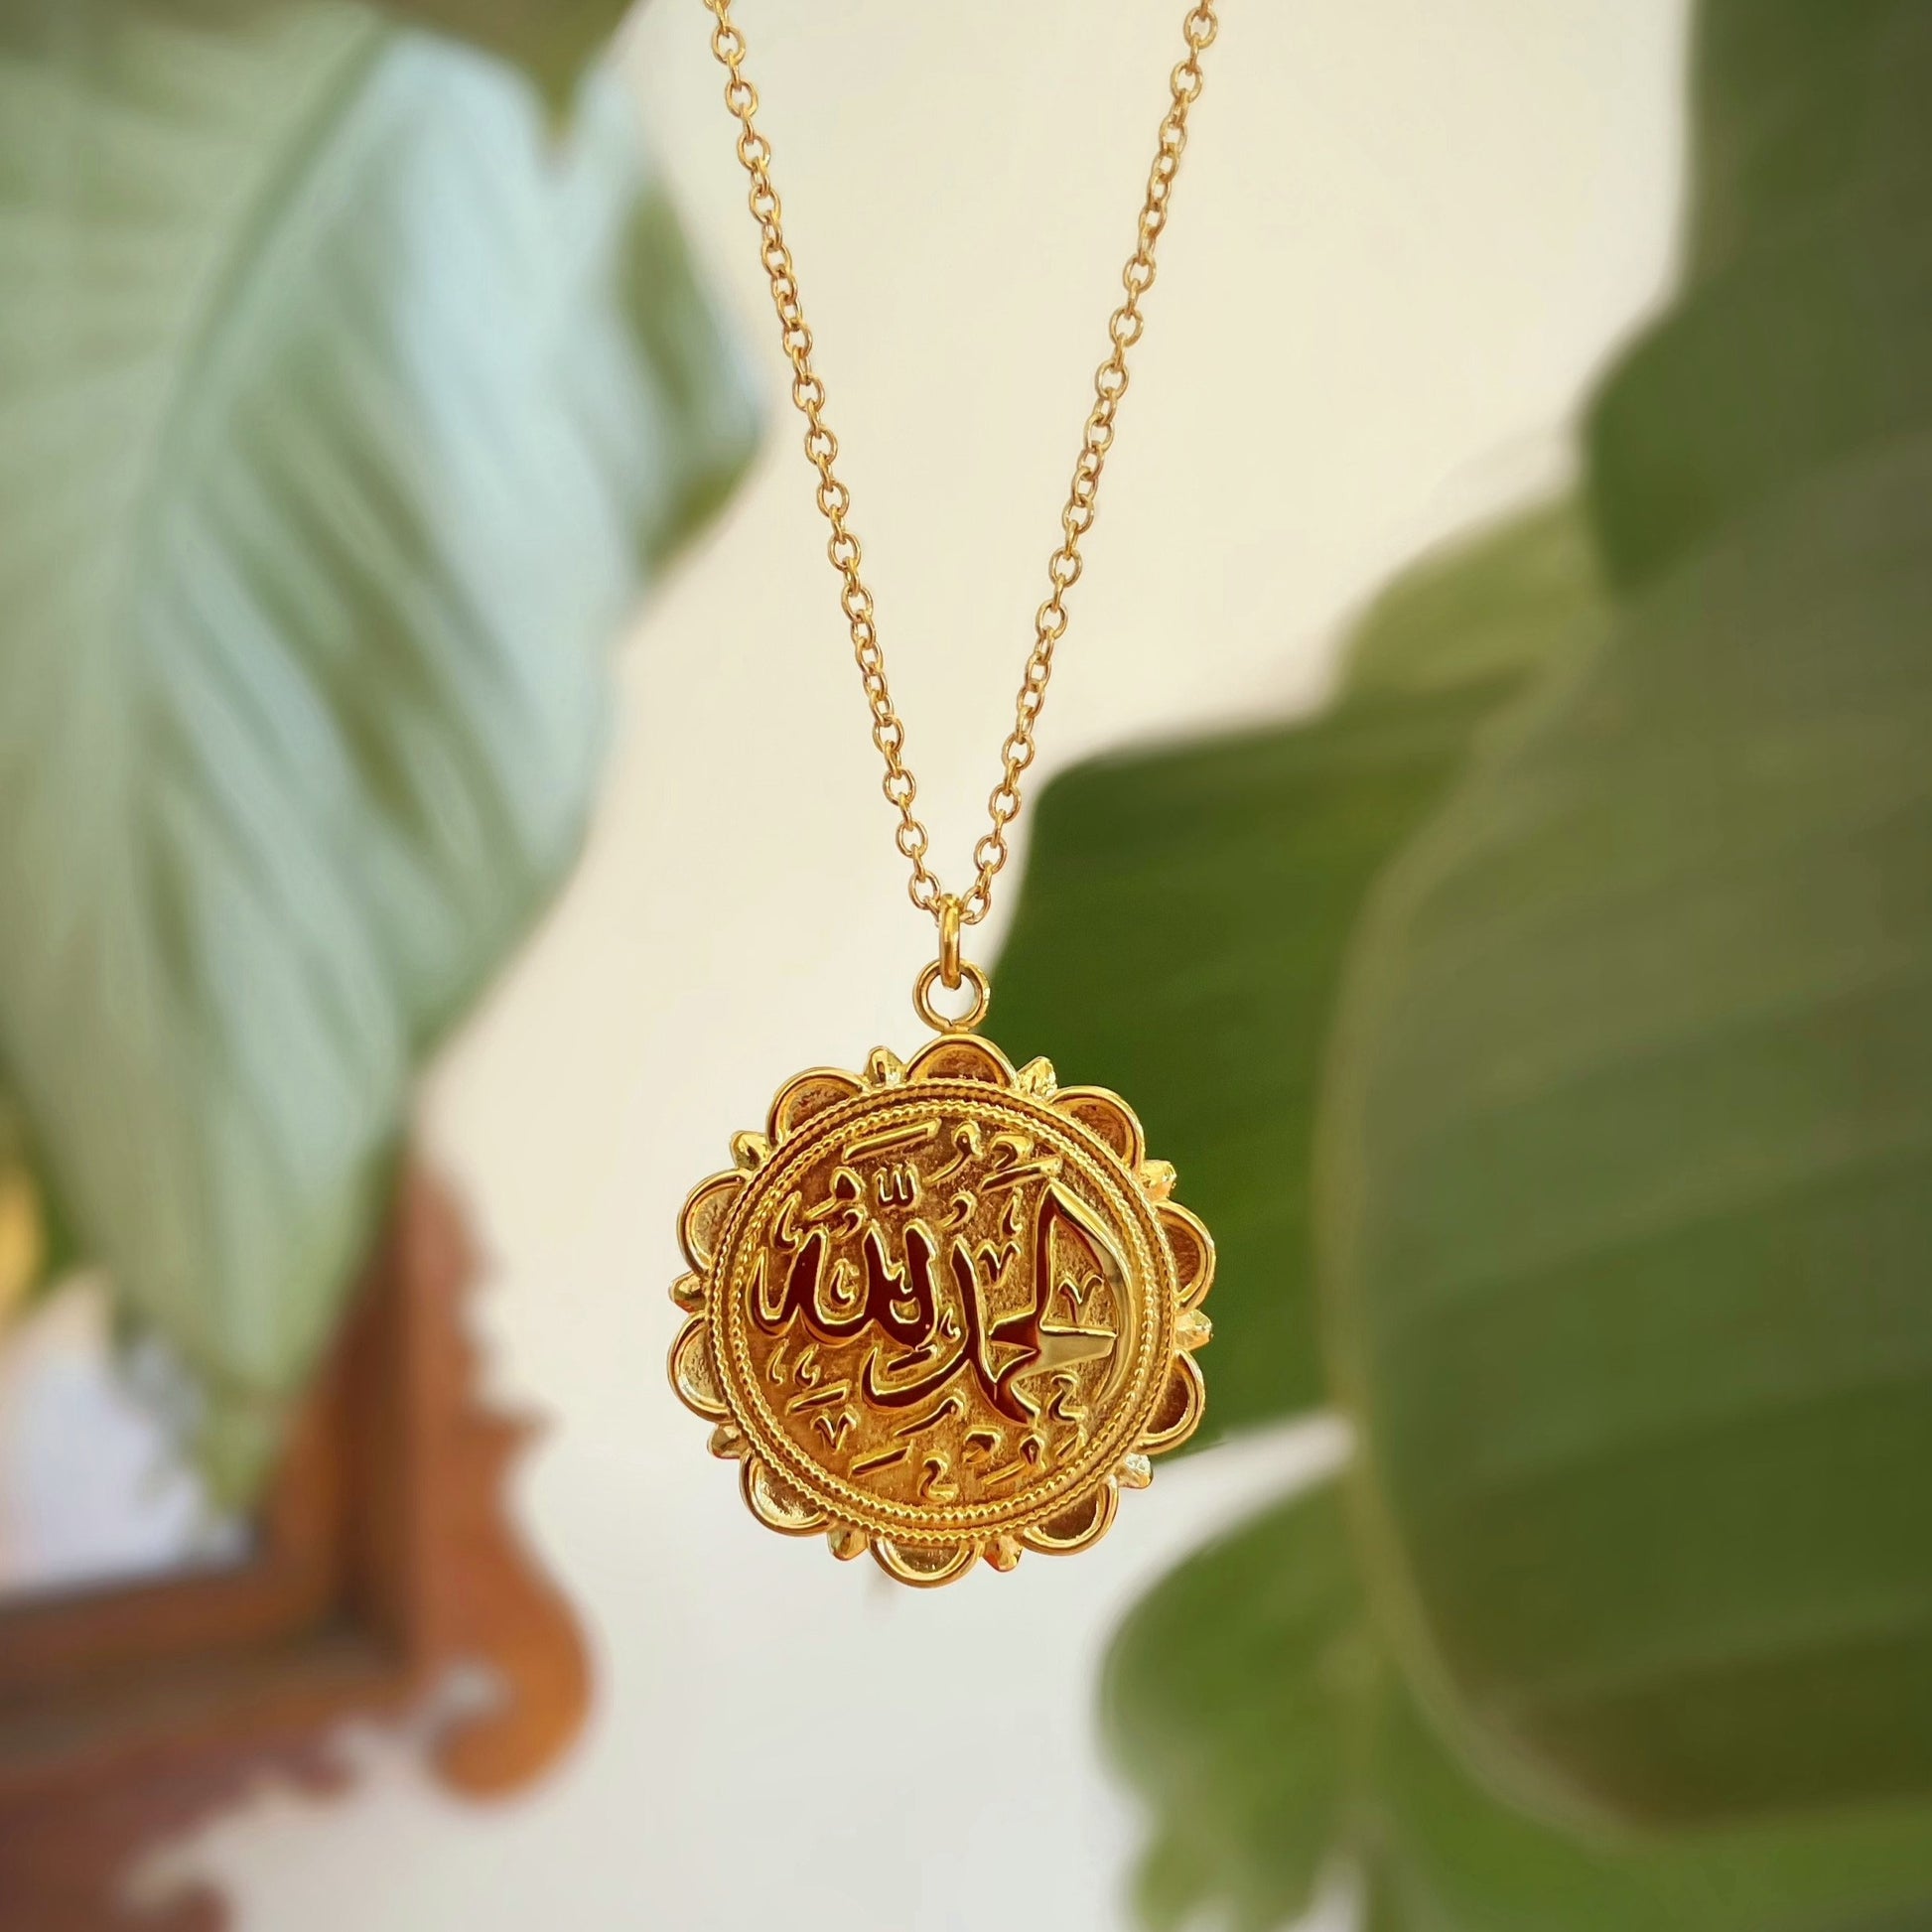 Faith inspired Alhumdullilah medallion necklace. 